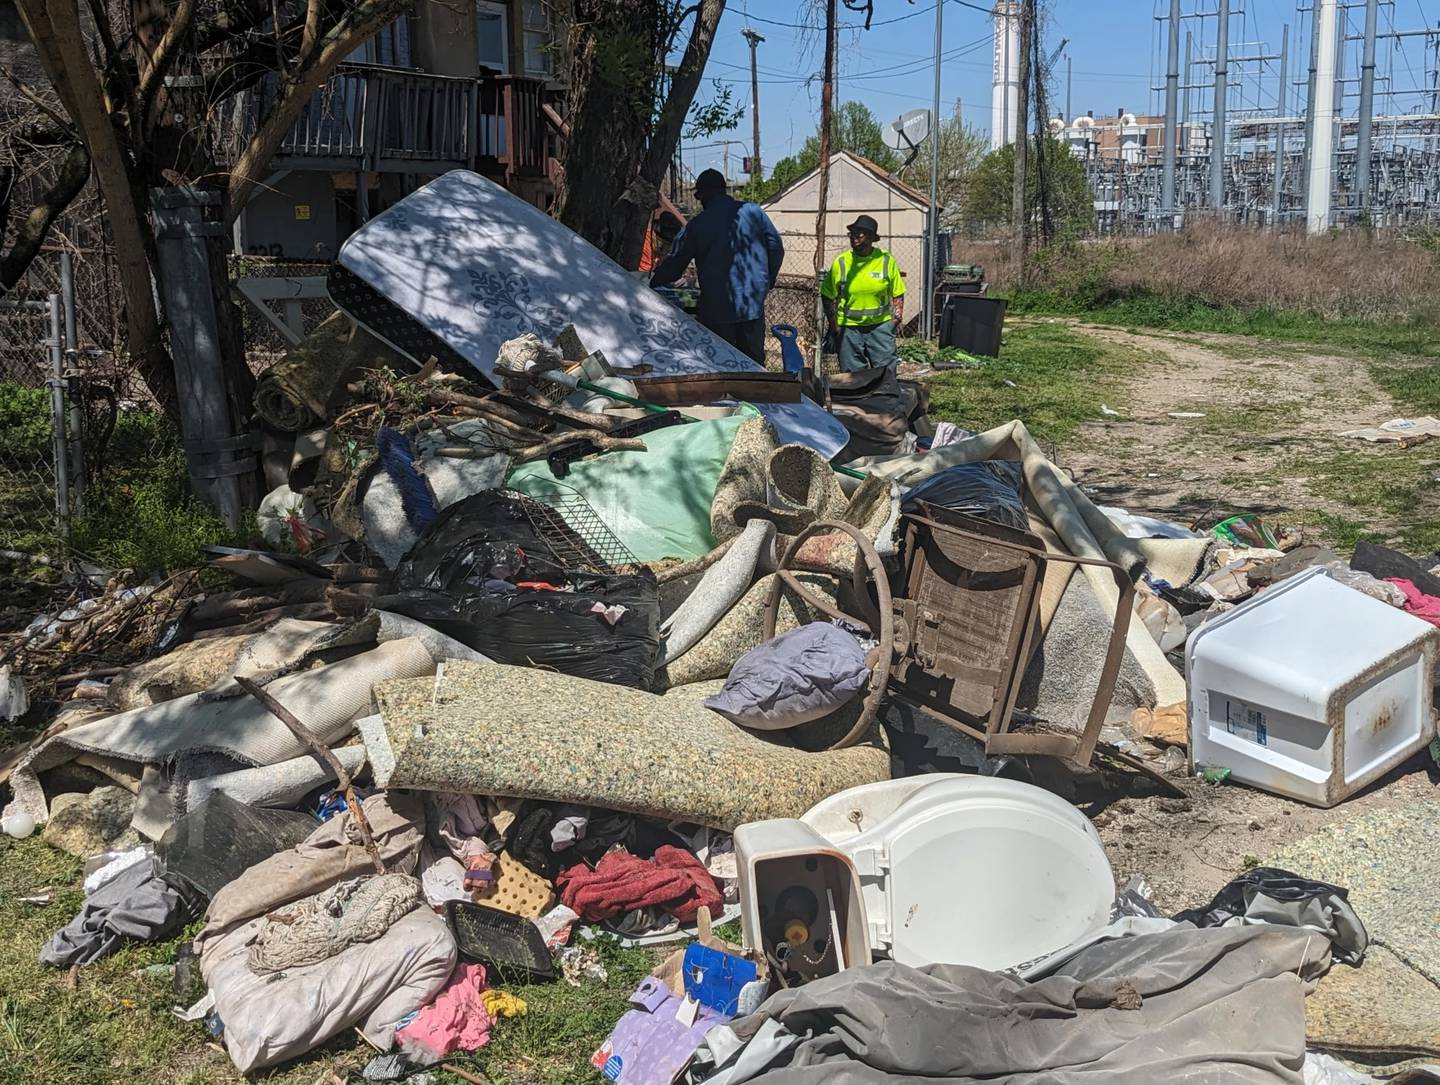 DPW tackles a pile of debris behind a home in Westport.